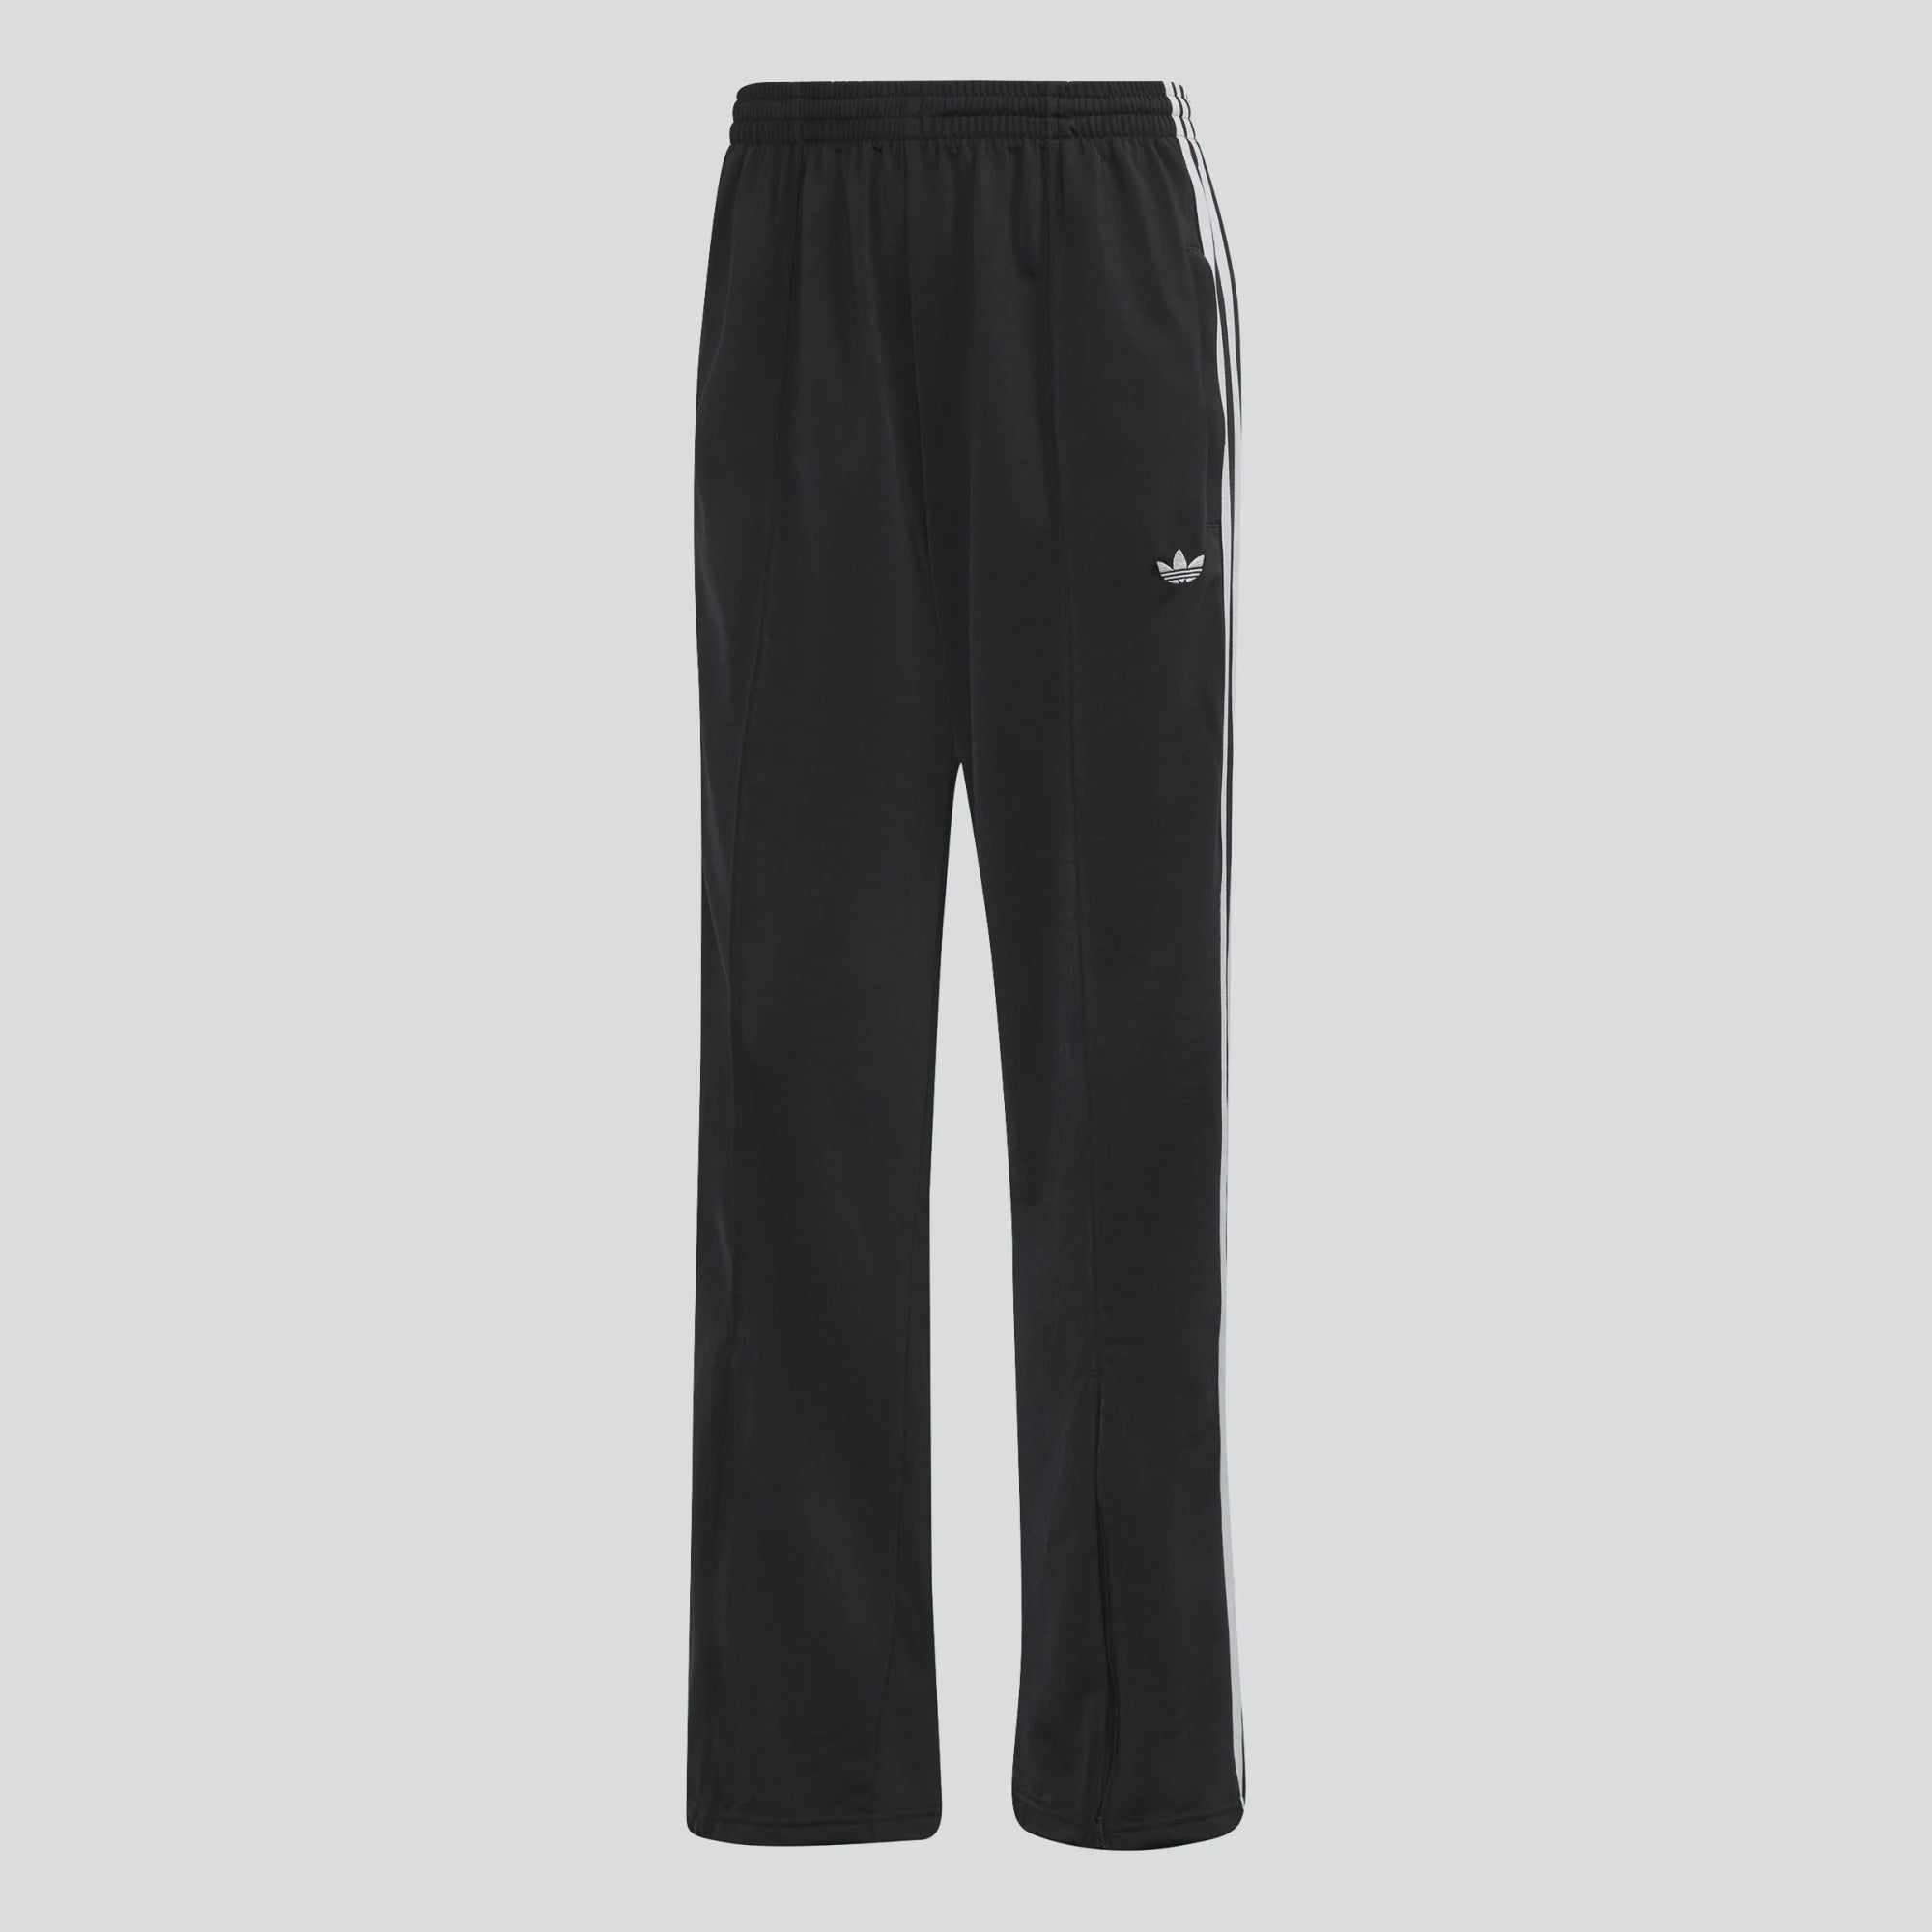 Adidas – Firebird Track Pants Black/White